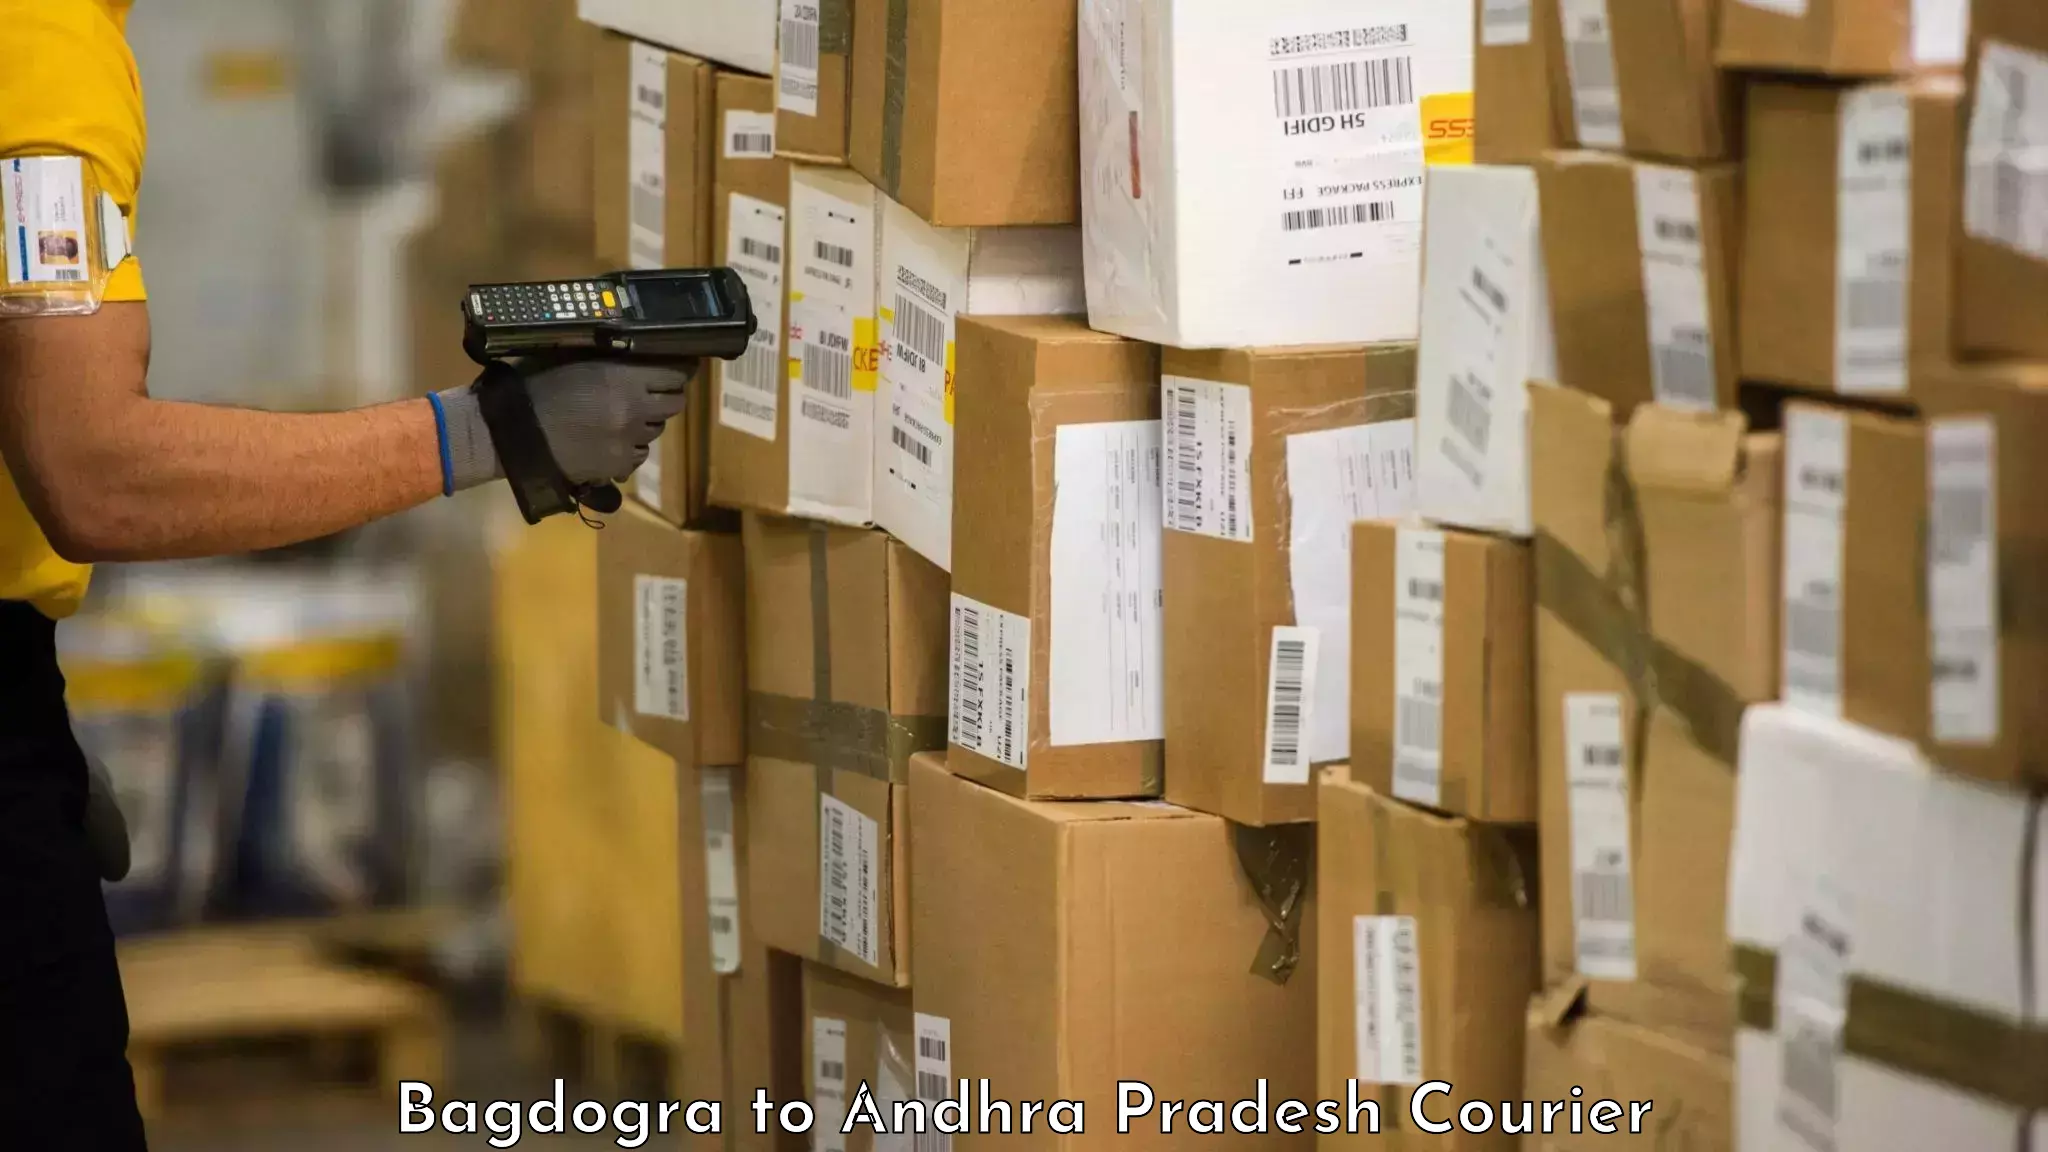 Baggage delivery scheduling Bagdogra to Devarapalli